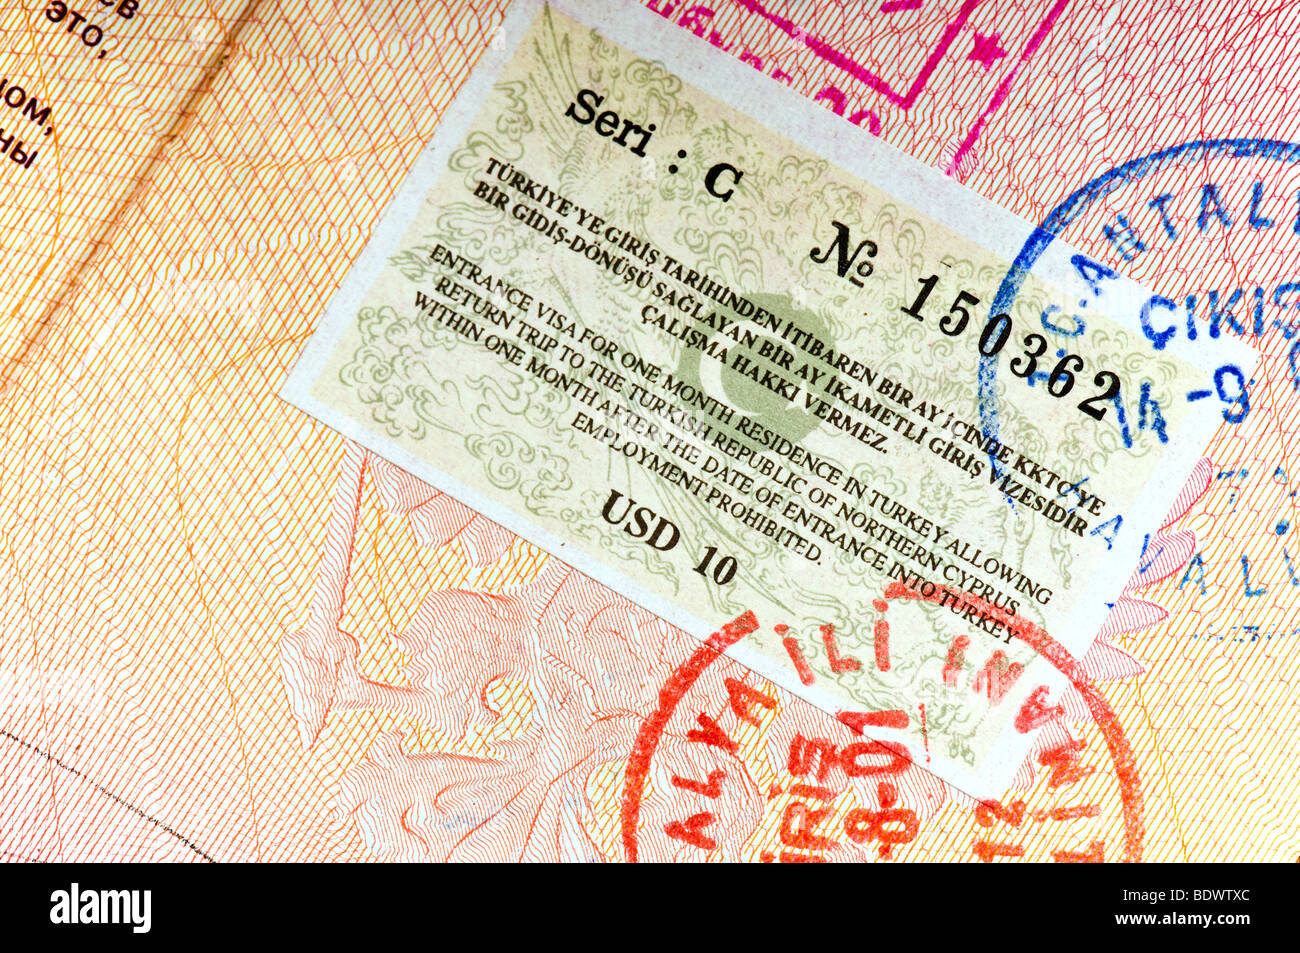 Turkey visa in international passport Stock Photo